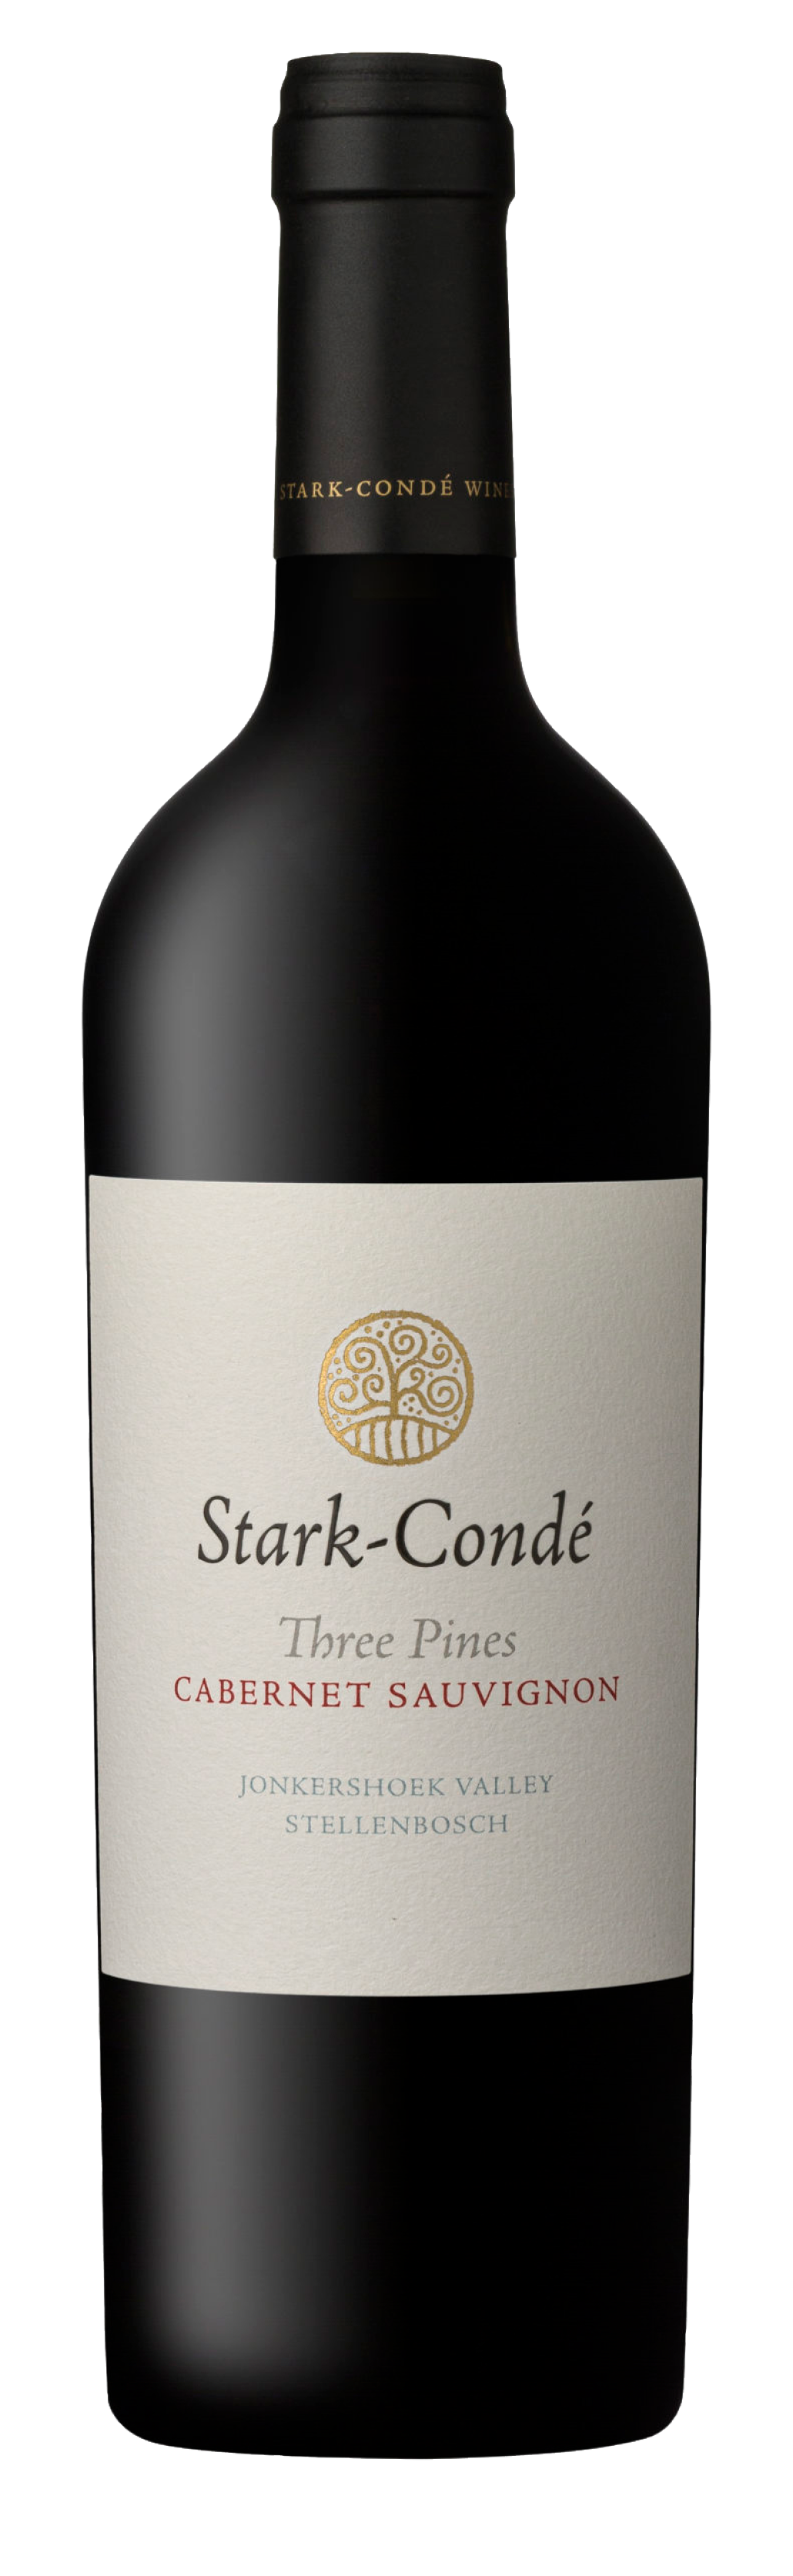 Stark-Condé<br />2017 Three Pines Cabernet Sauvignon<br>South Africa